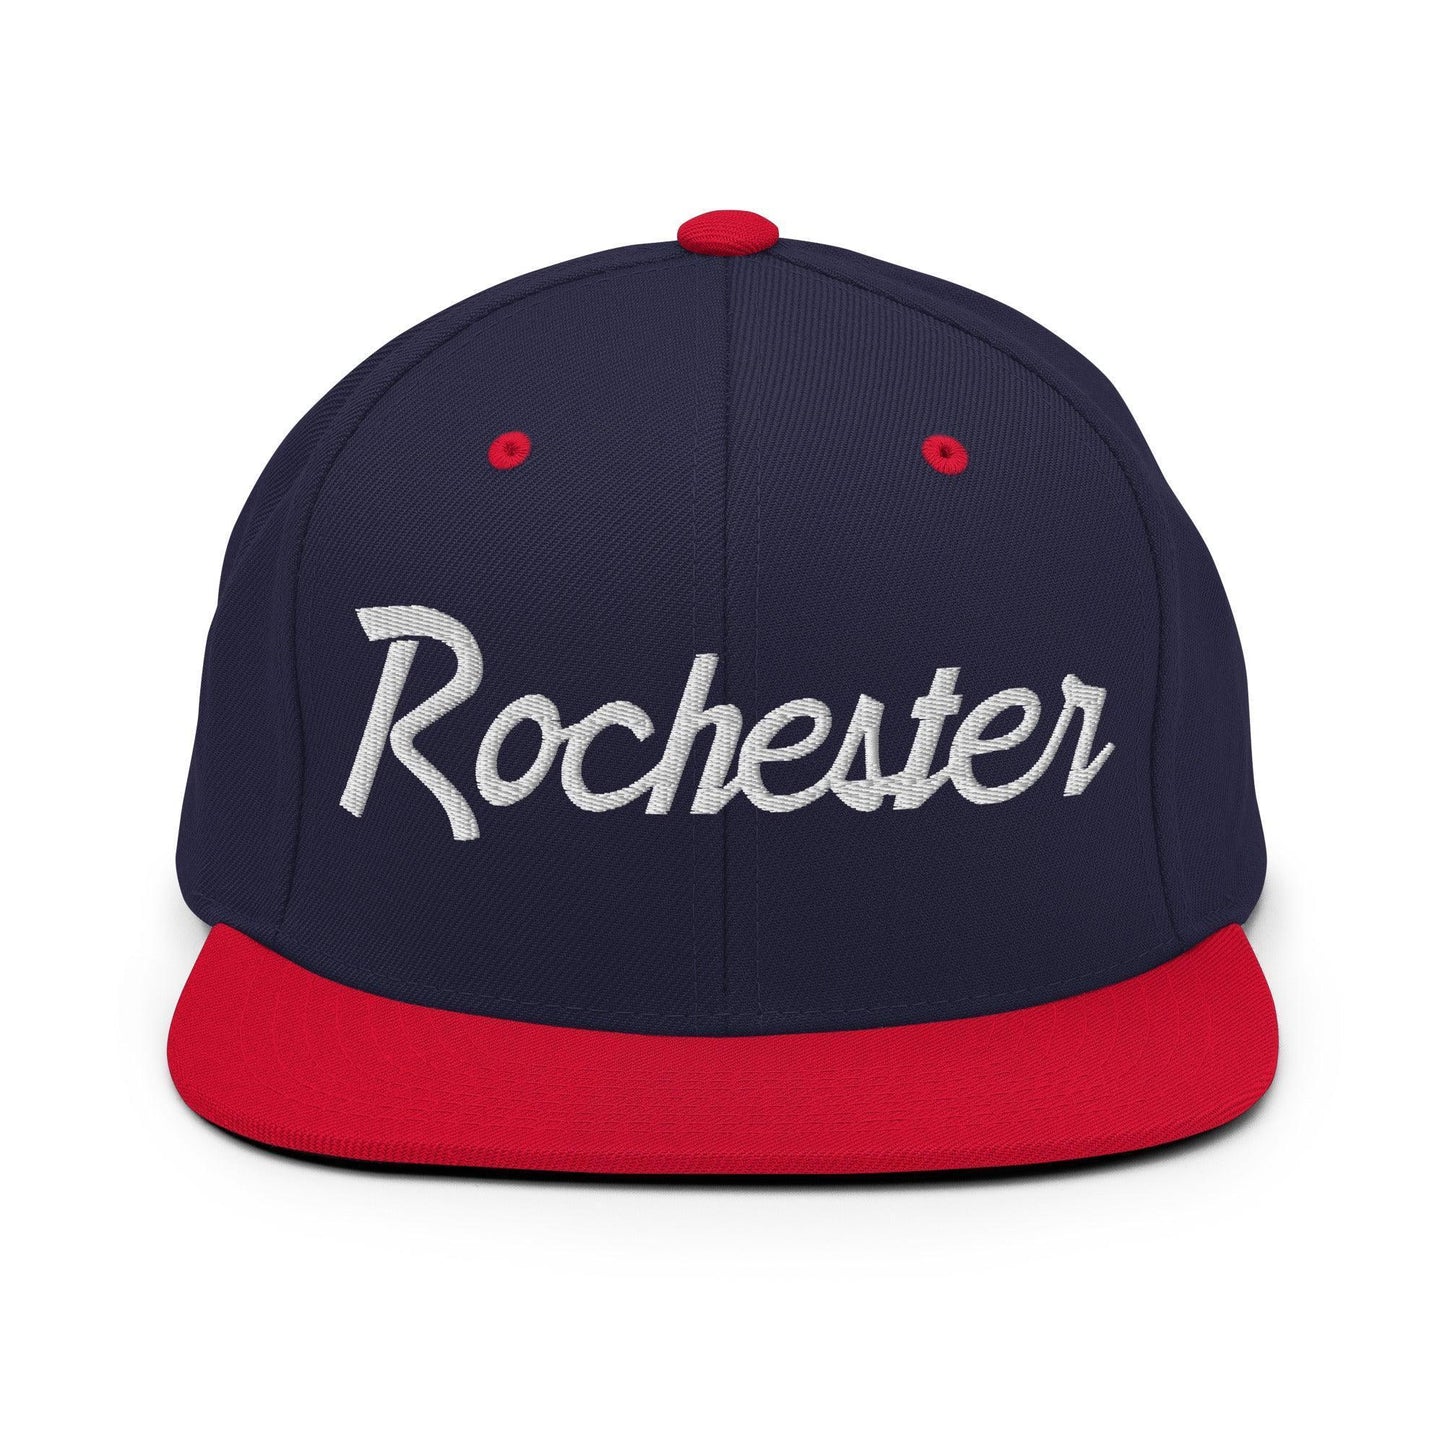 Rochester Script Snapback Hat Navy Red